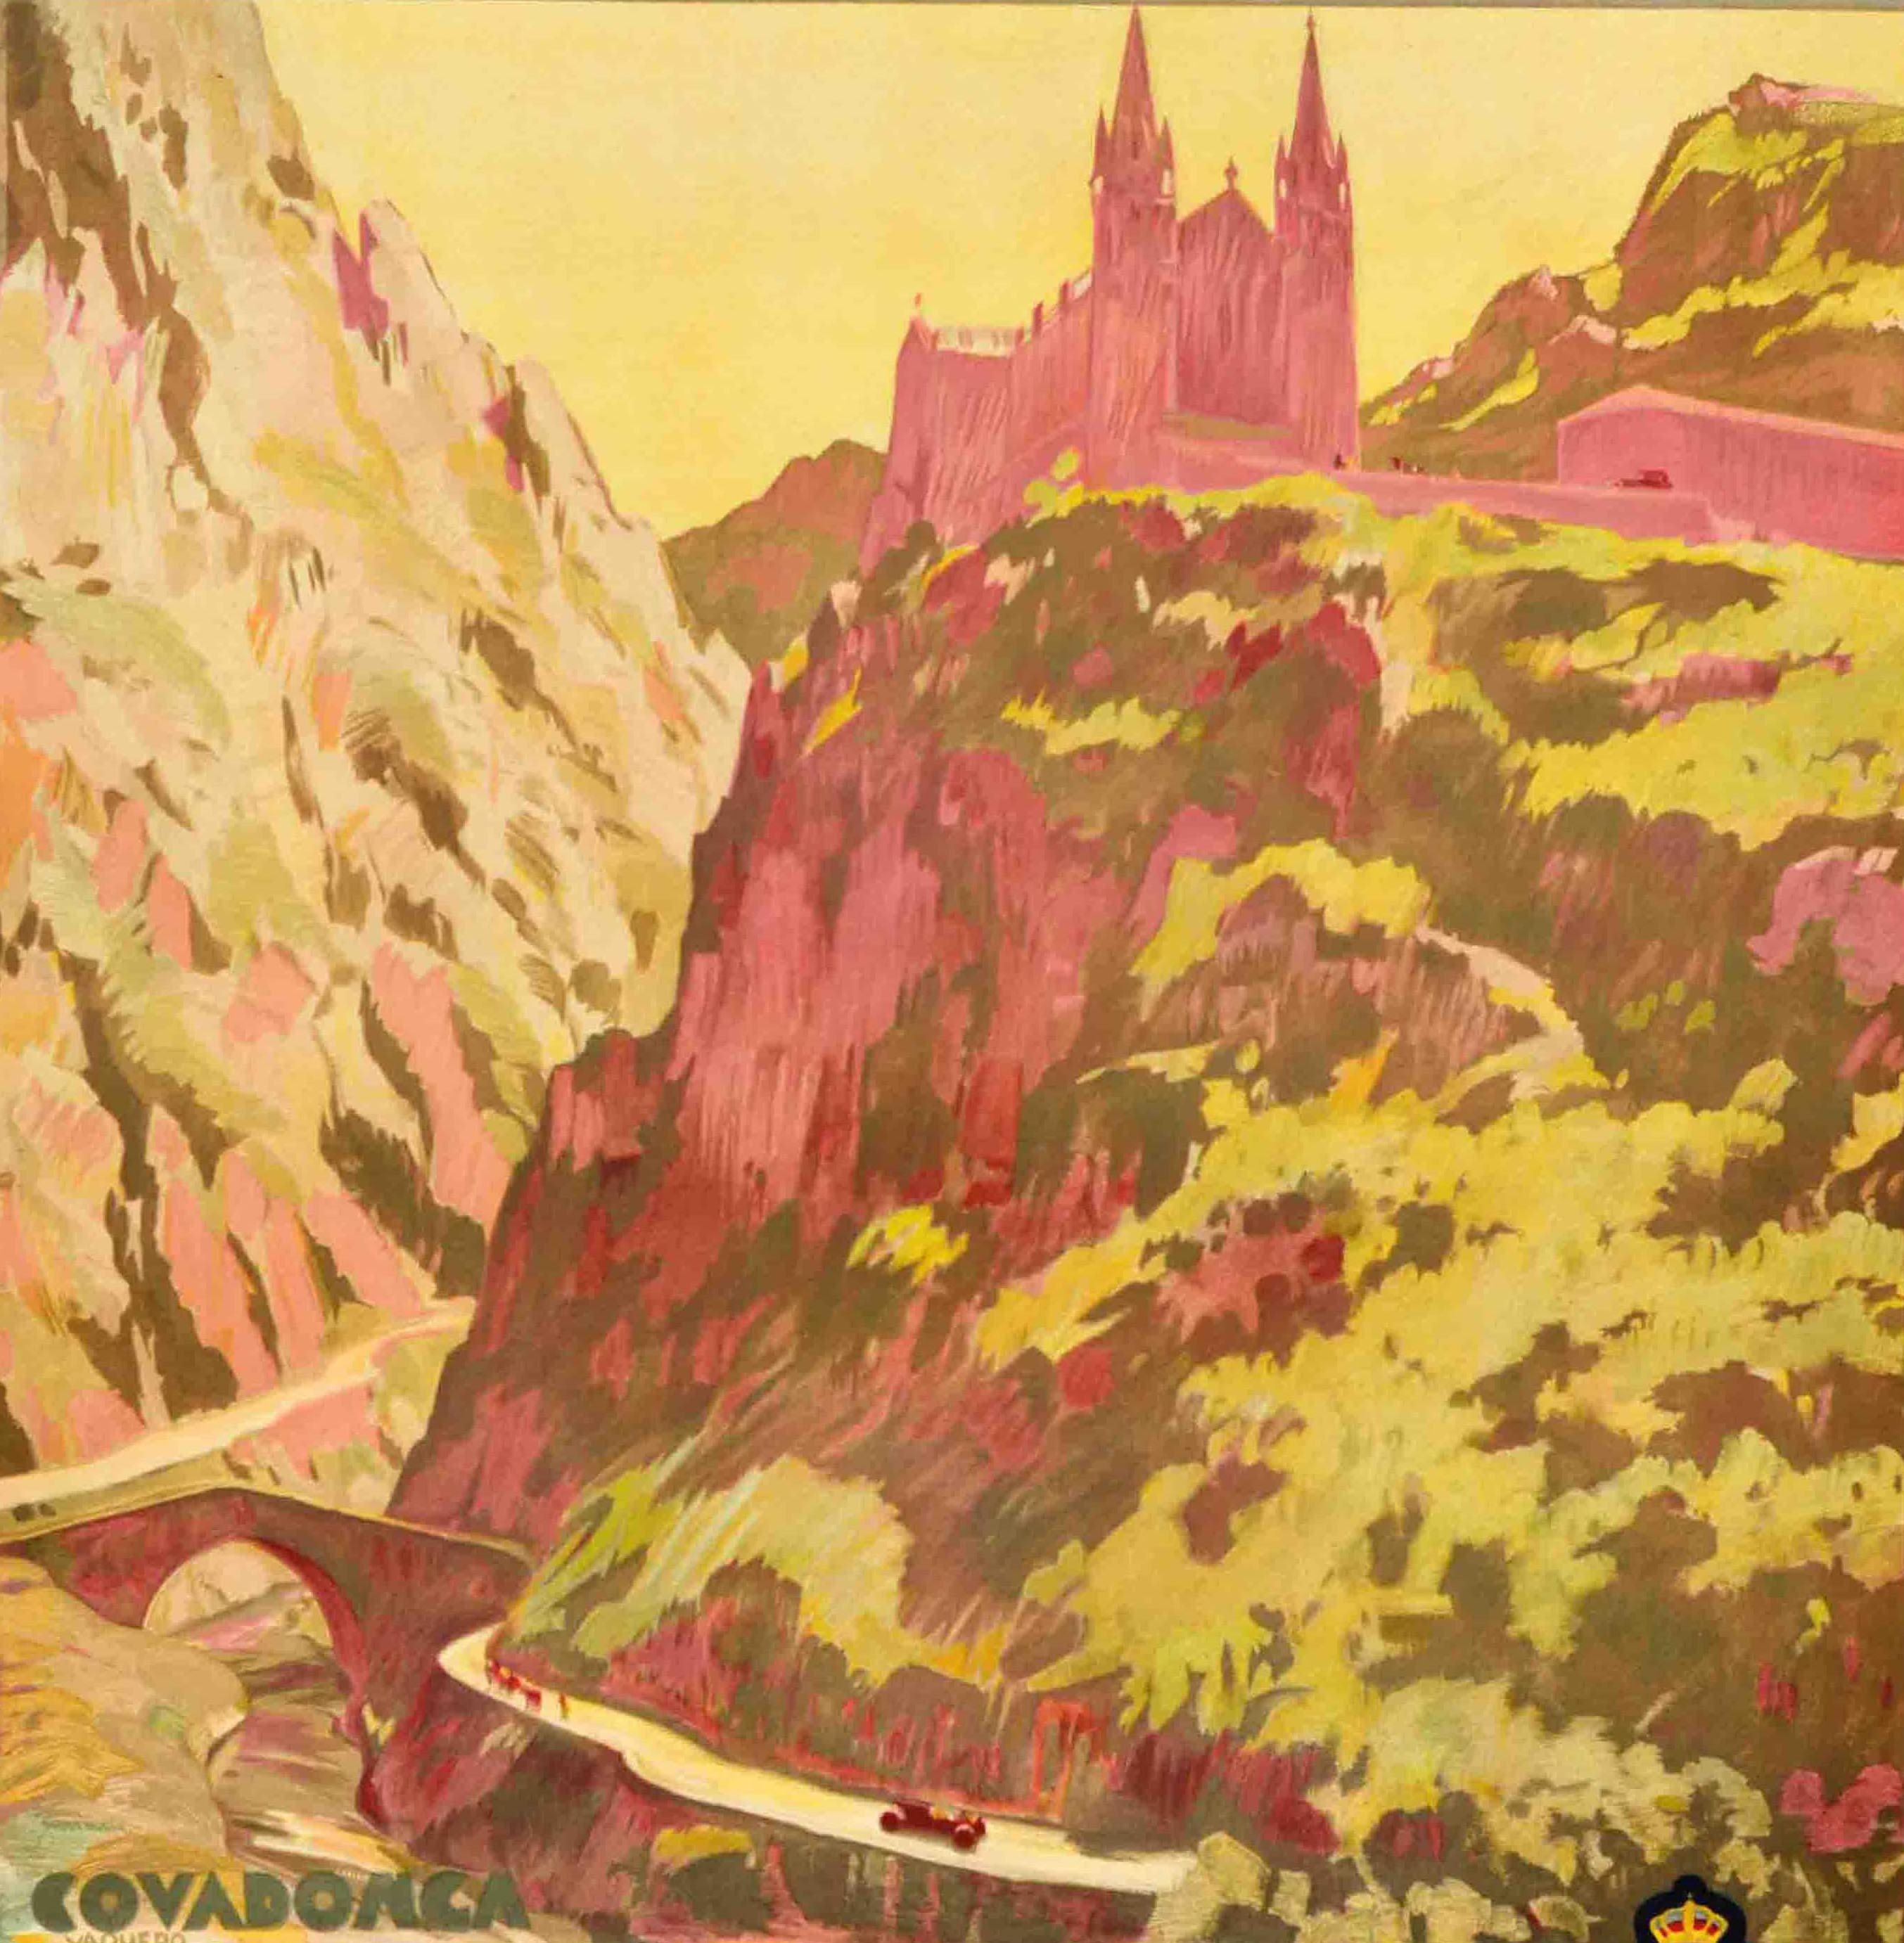 Original Vintage Travel Poster Asturias Covadonga PNT Basilica Santa Maria Spain - Print by Unknown